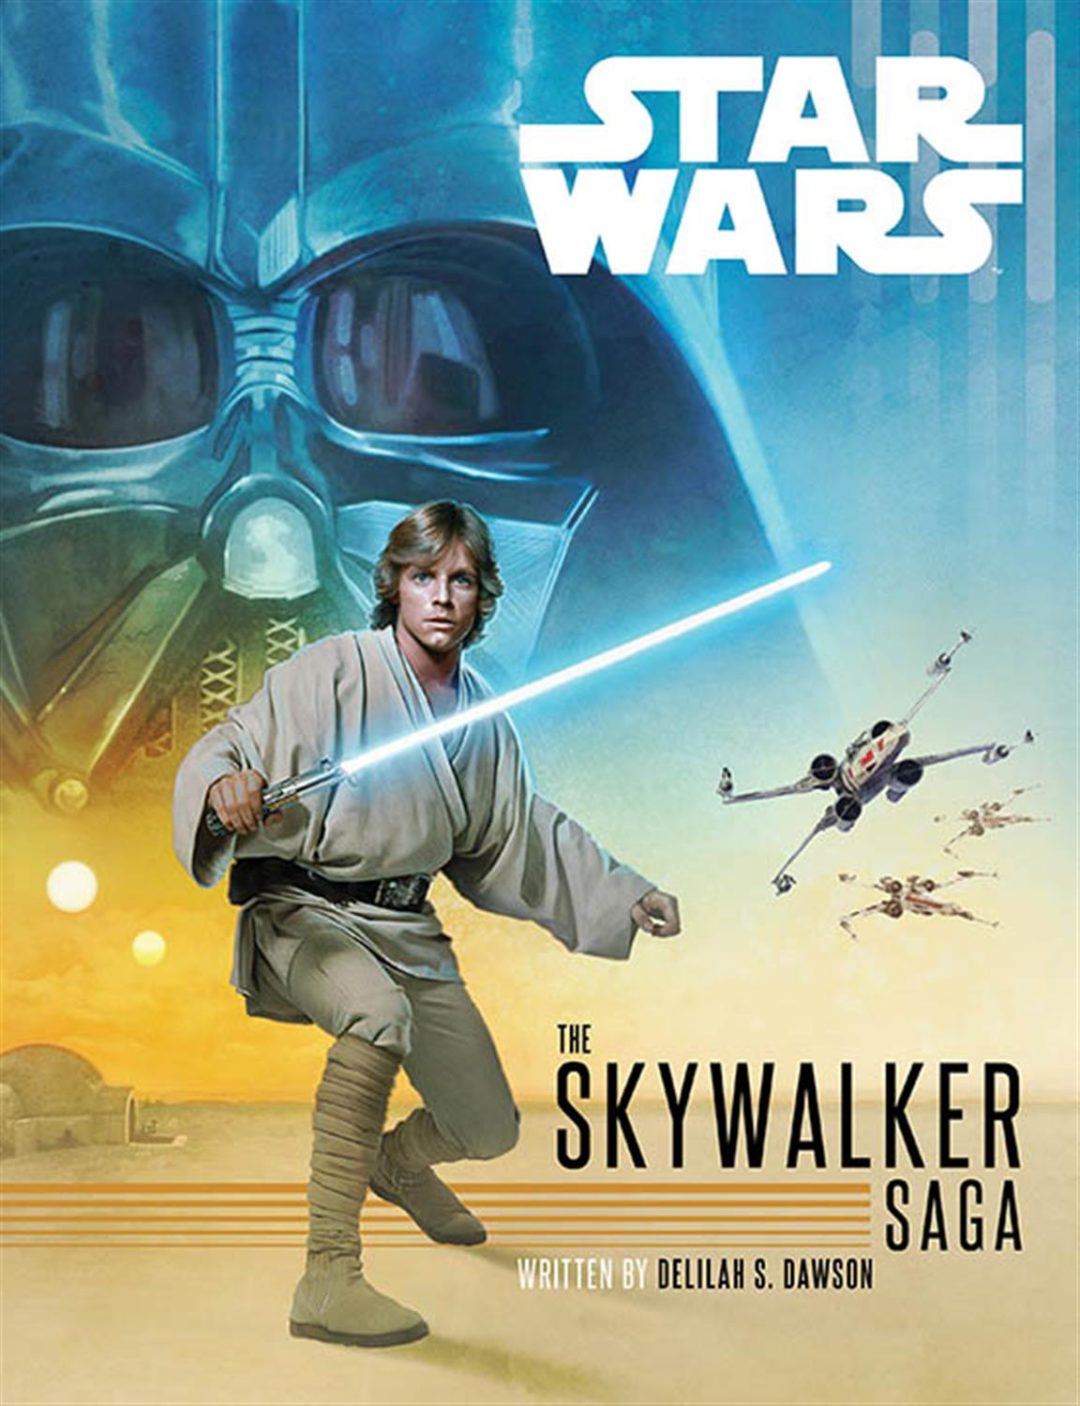 Lucasfilm Publishing Reveals Star Wars Books at Star Wars